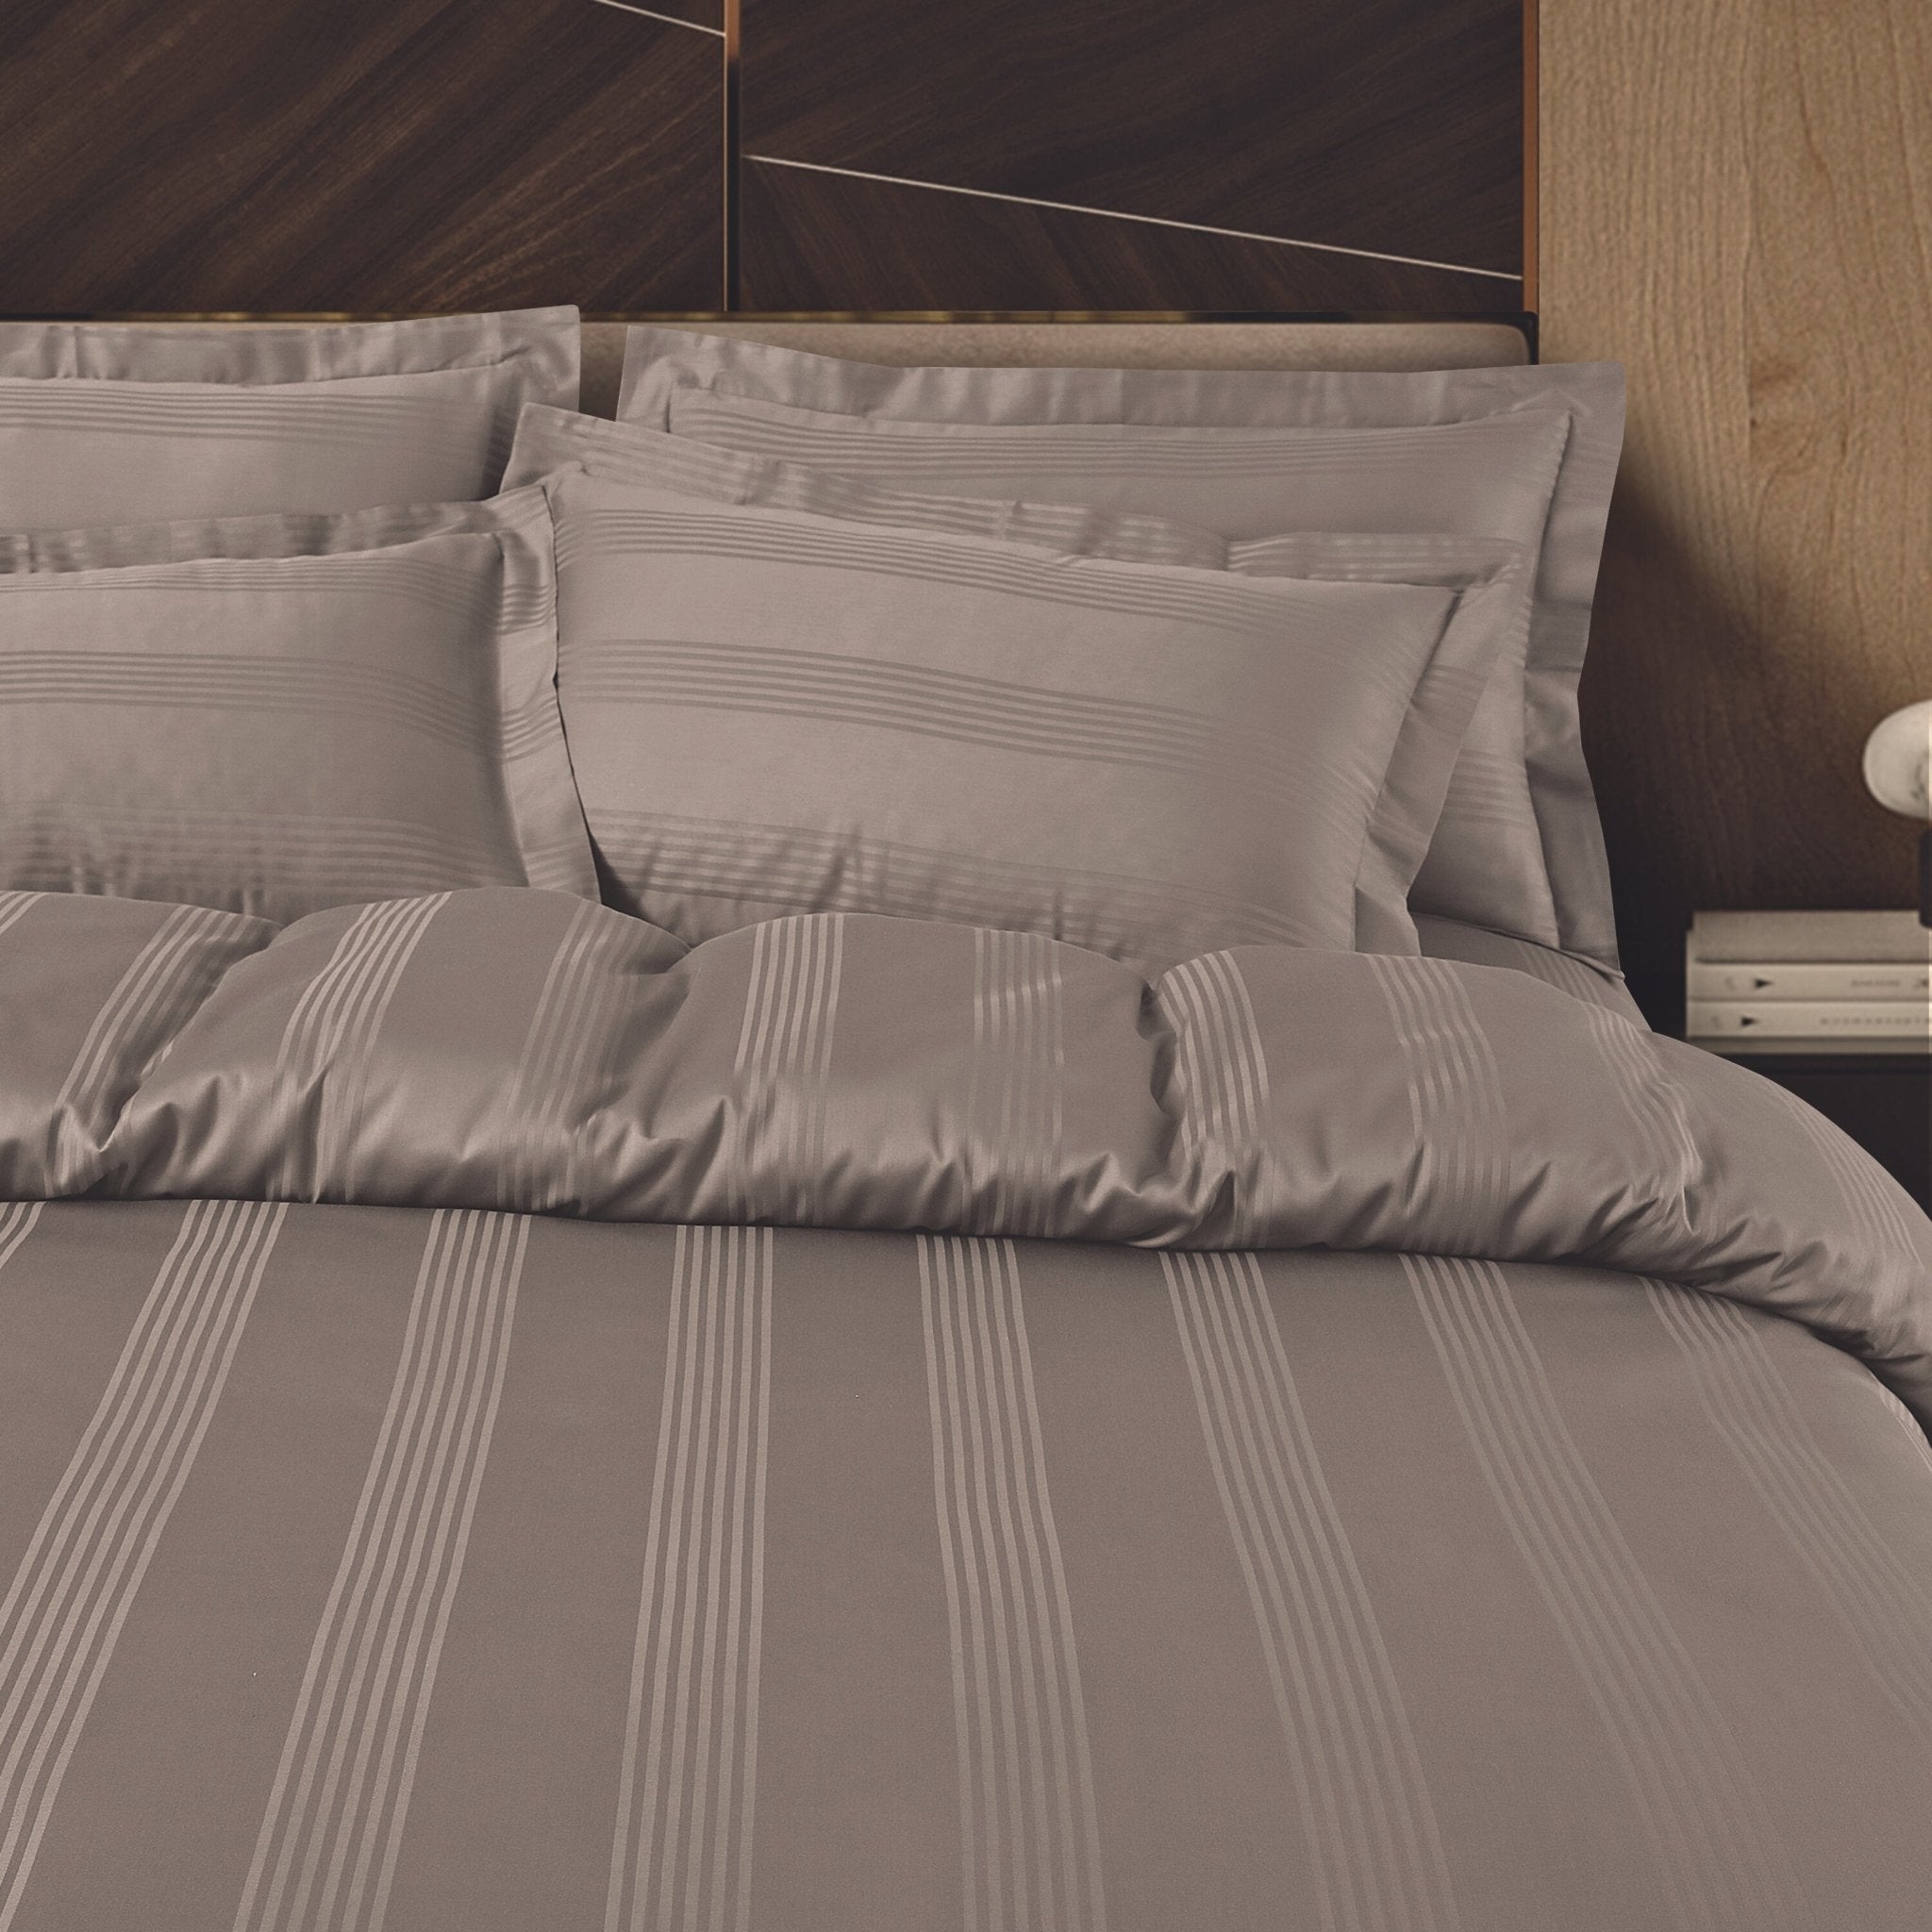 Malako Turin Jacquard Taupe Brown Stripes 500 TC 100% Cotton King Size Bed Sheet - MALAKO